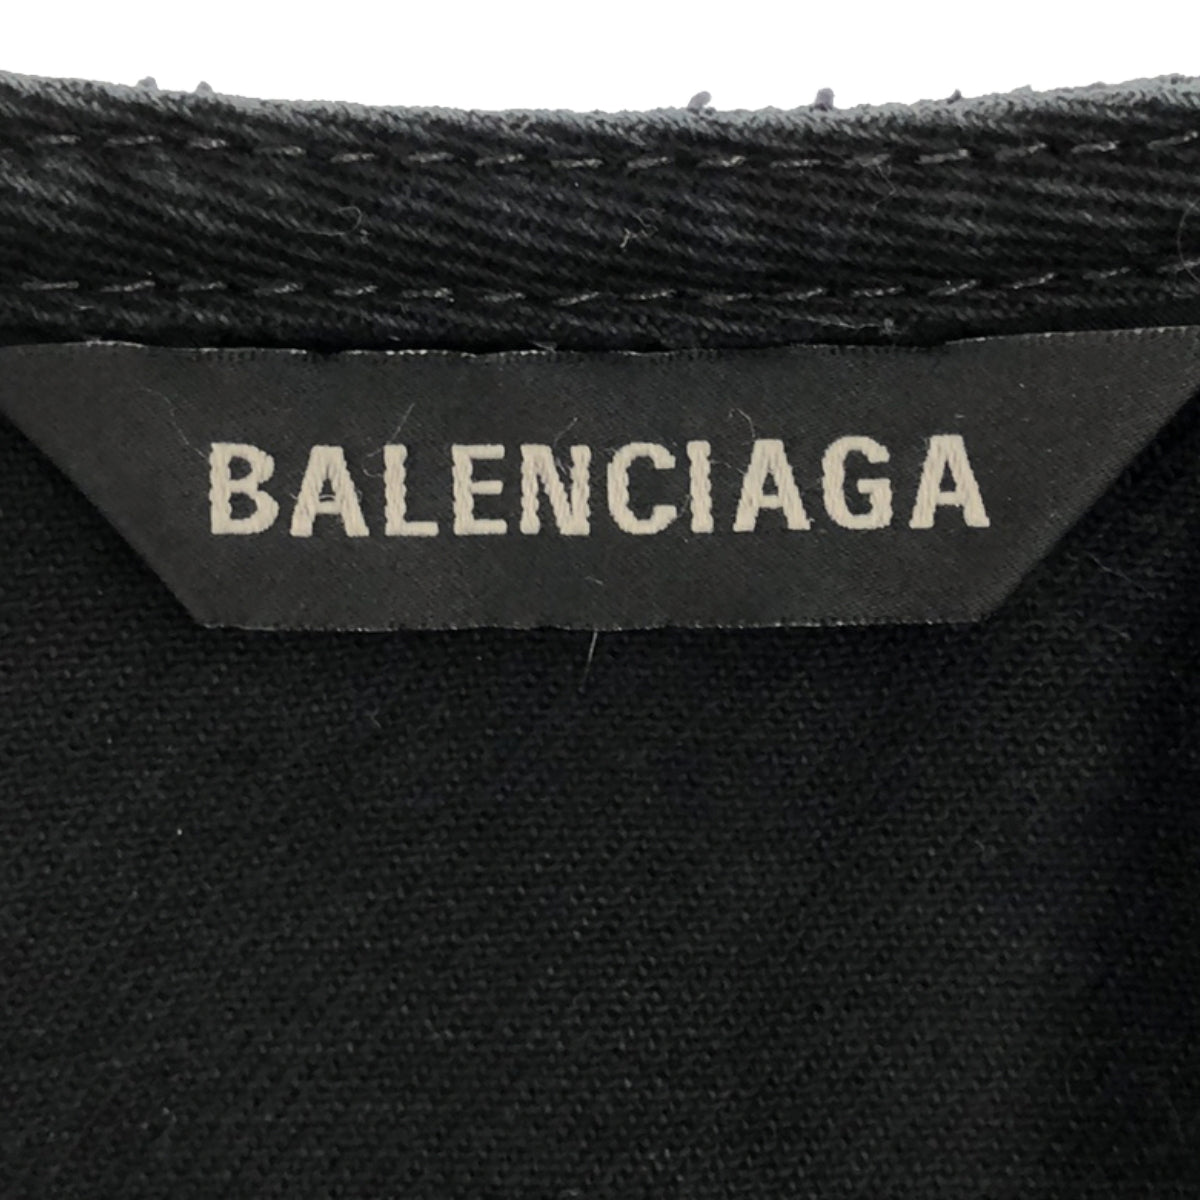 BALENCIAGA / バレンシアガ | ウォッシュドブラック ノースリーブデニムドレス | 34 | レディース